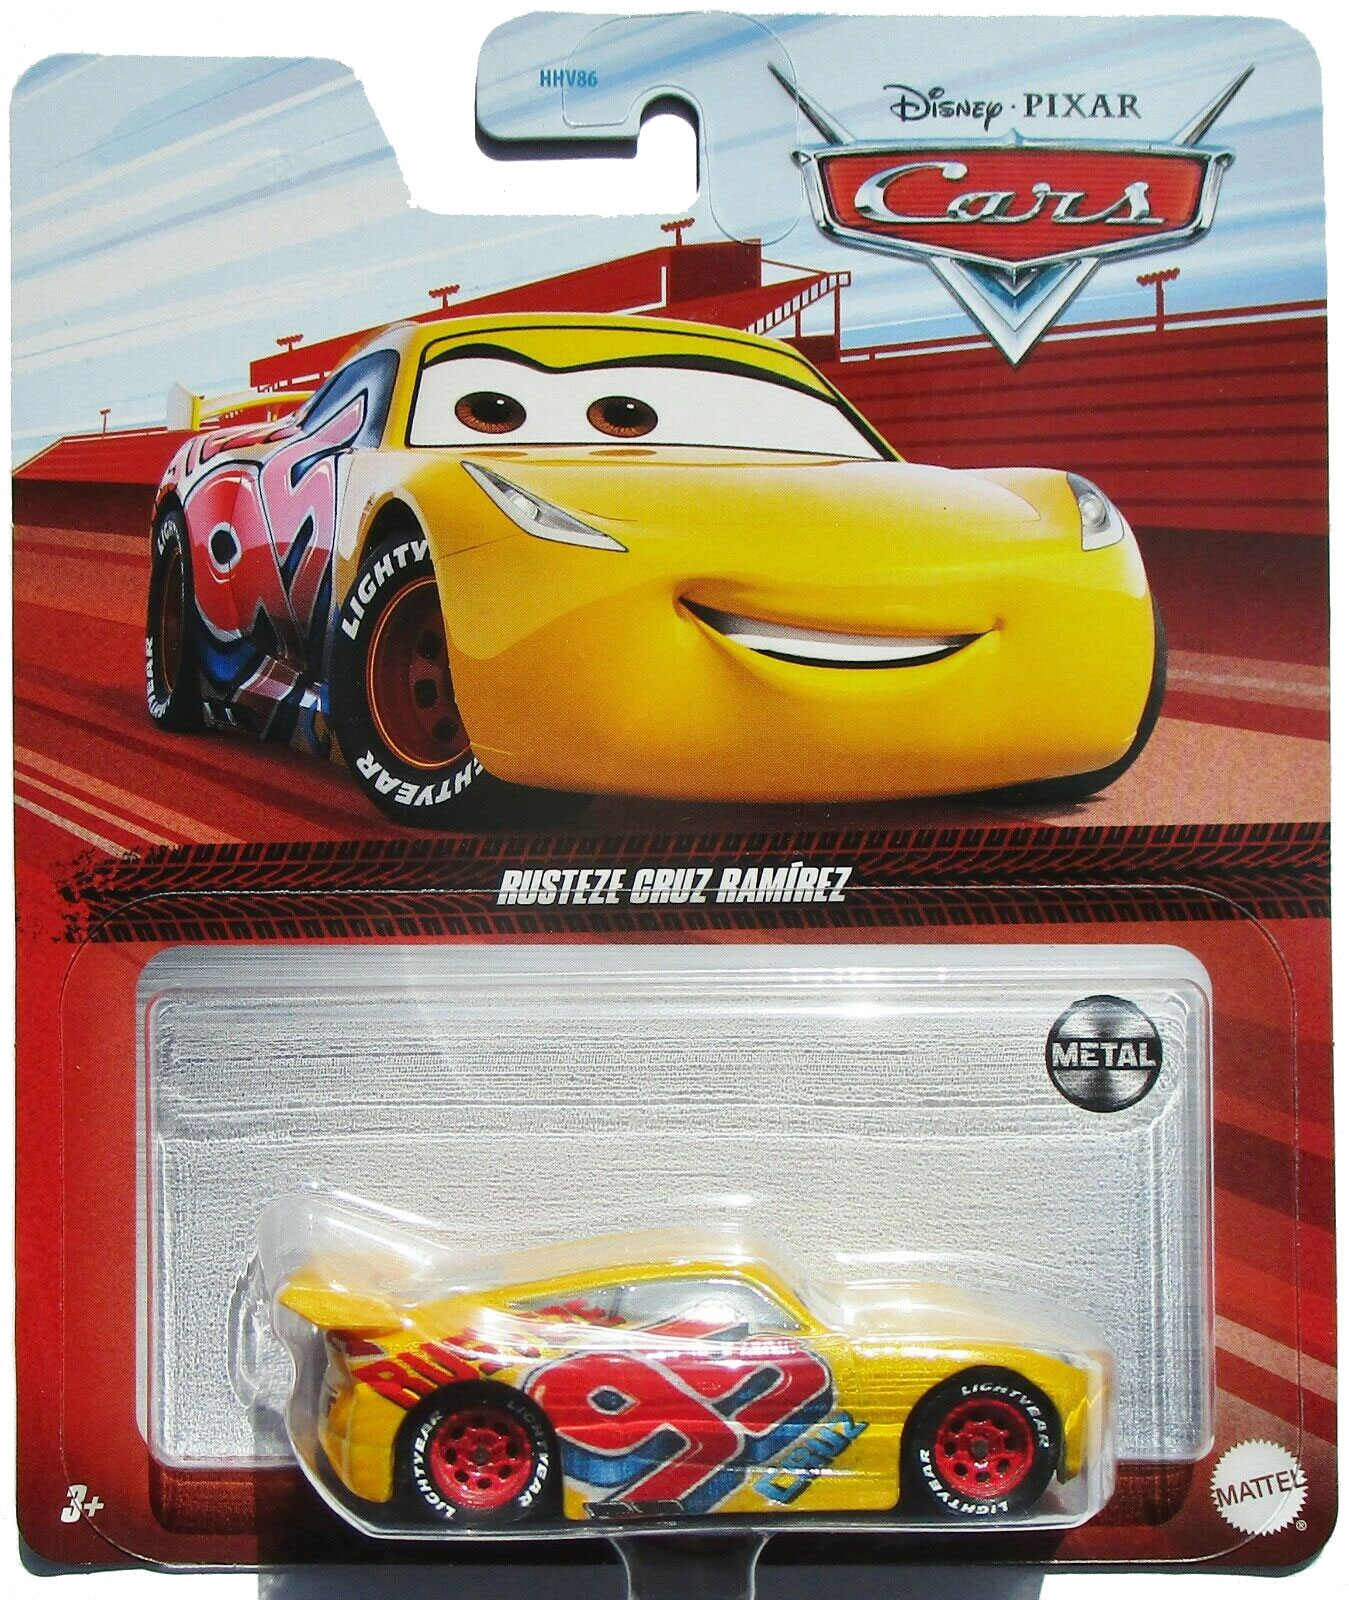 Mattel - Disney Pixar's Cars Die-Cast Vehicle Toy - RUSTEZE CRUZ RAMIREZ (FGD72)